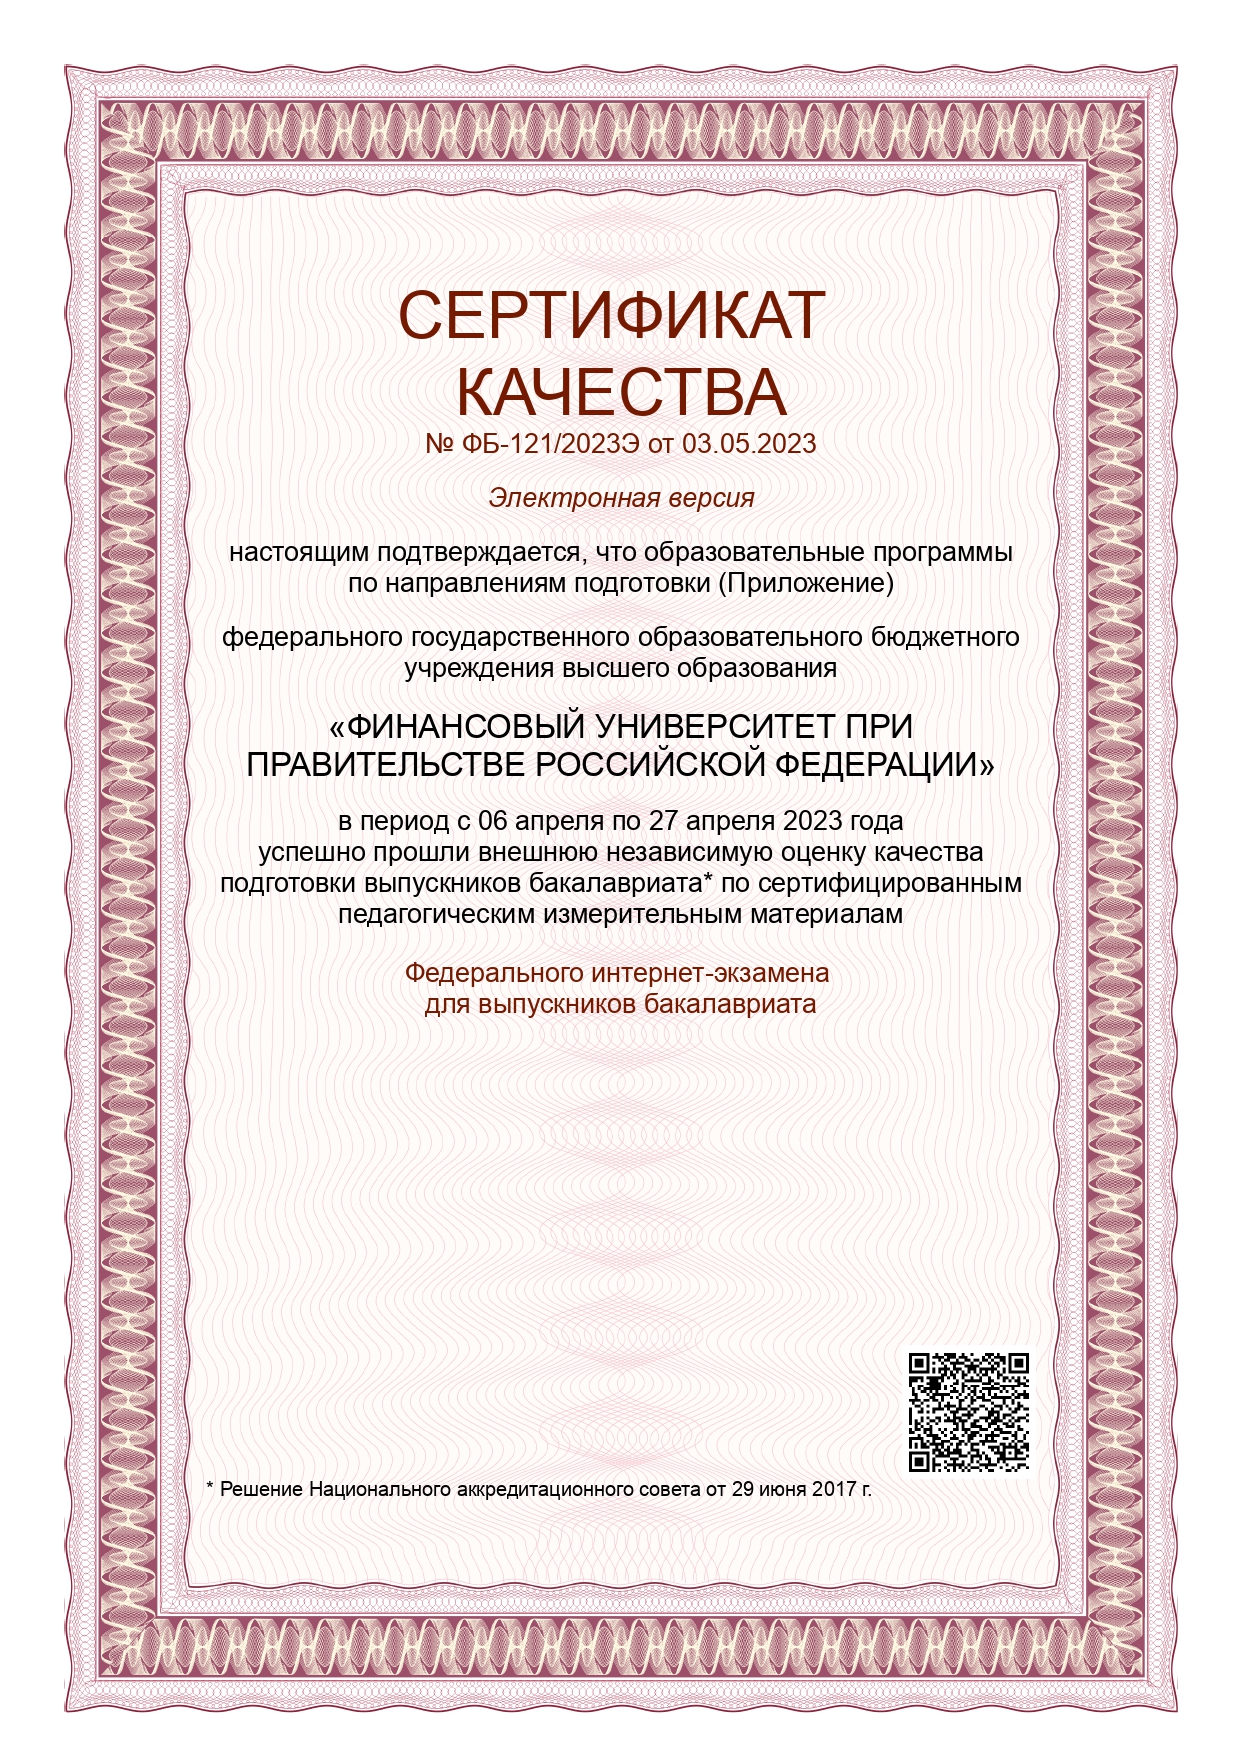 Сертификат качества ФИЭБ 2023-1_page-0001.jpg